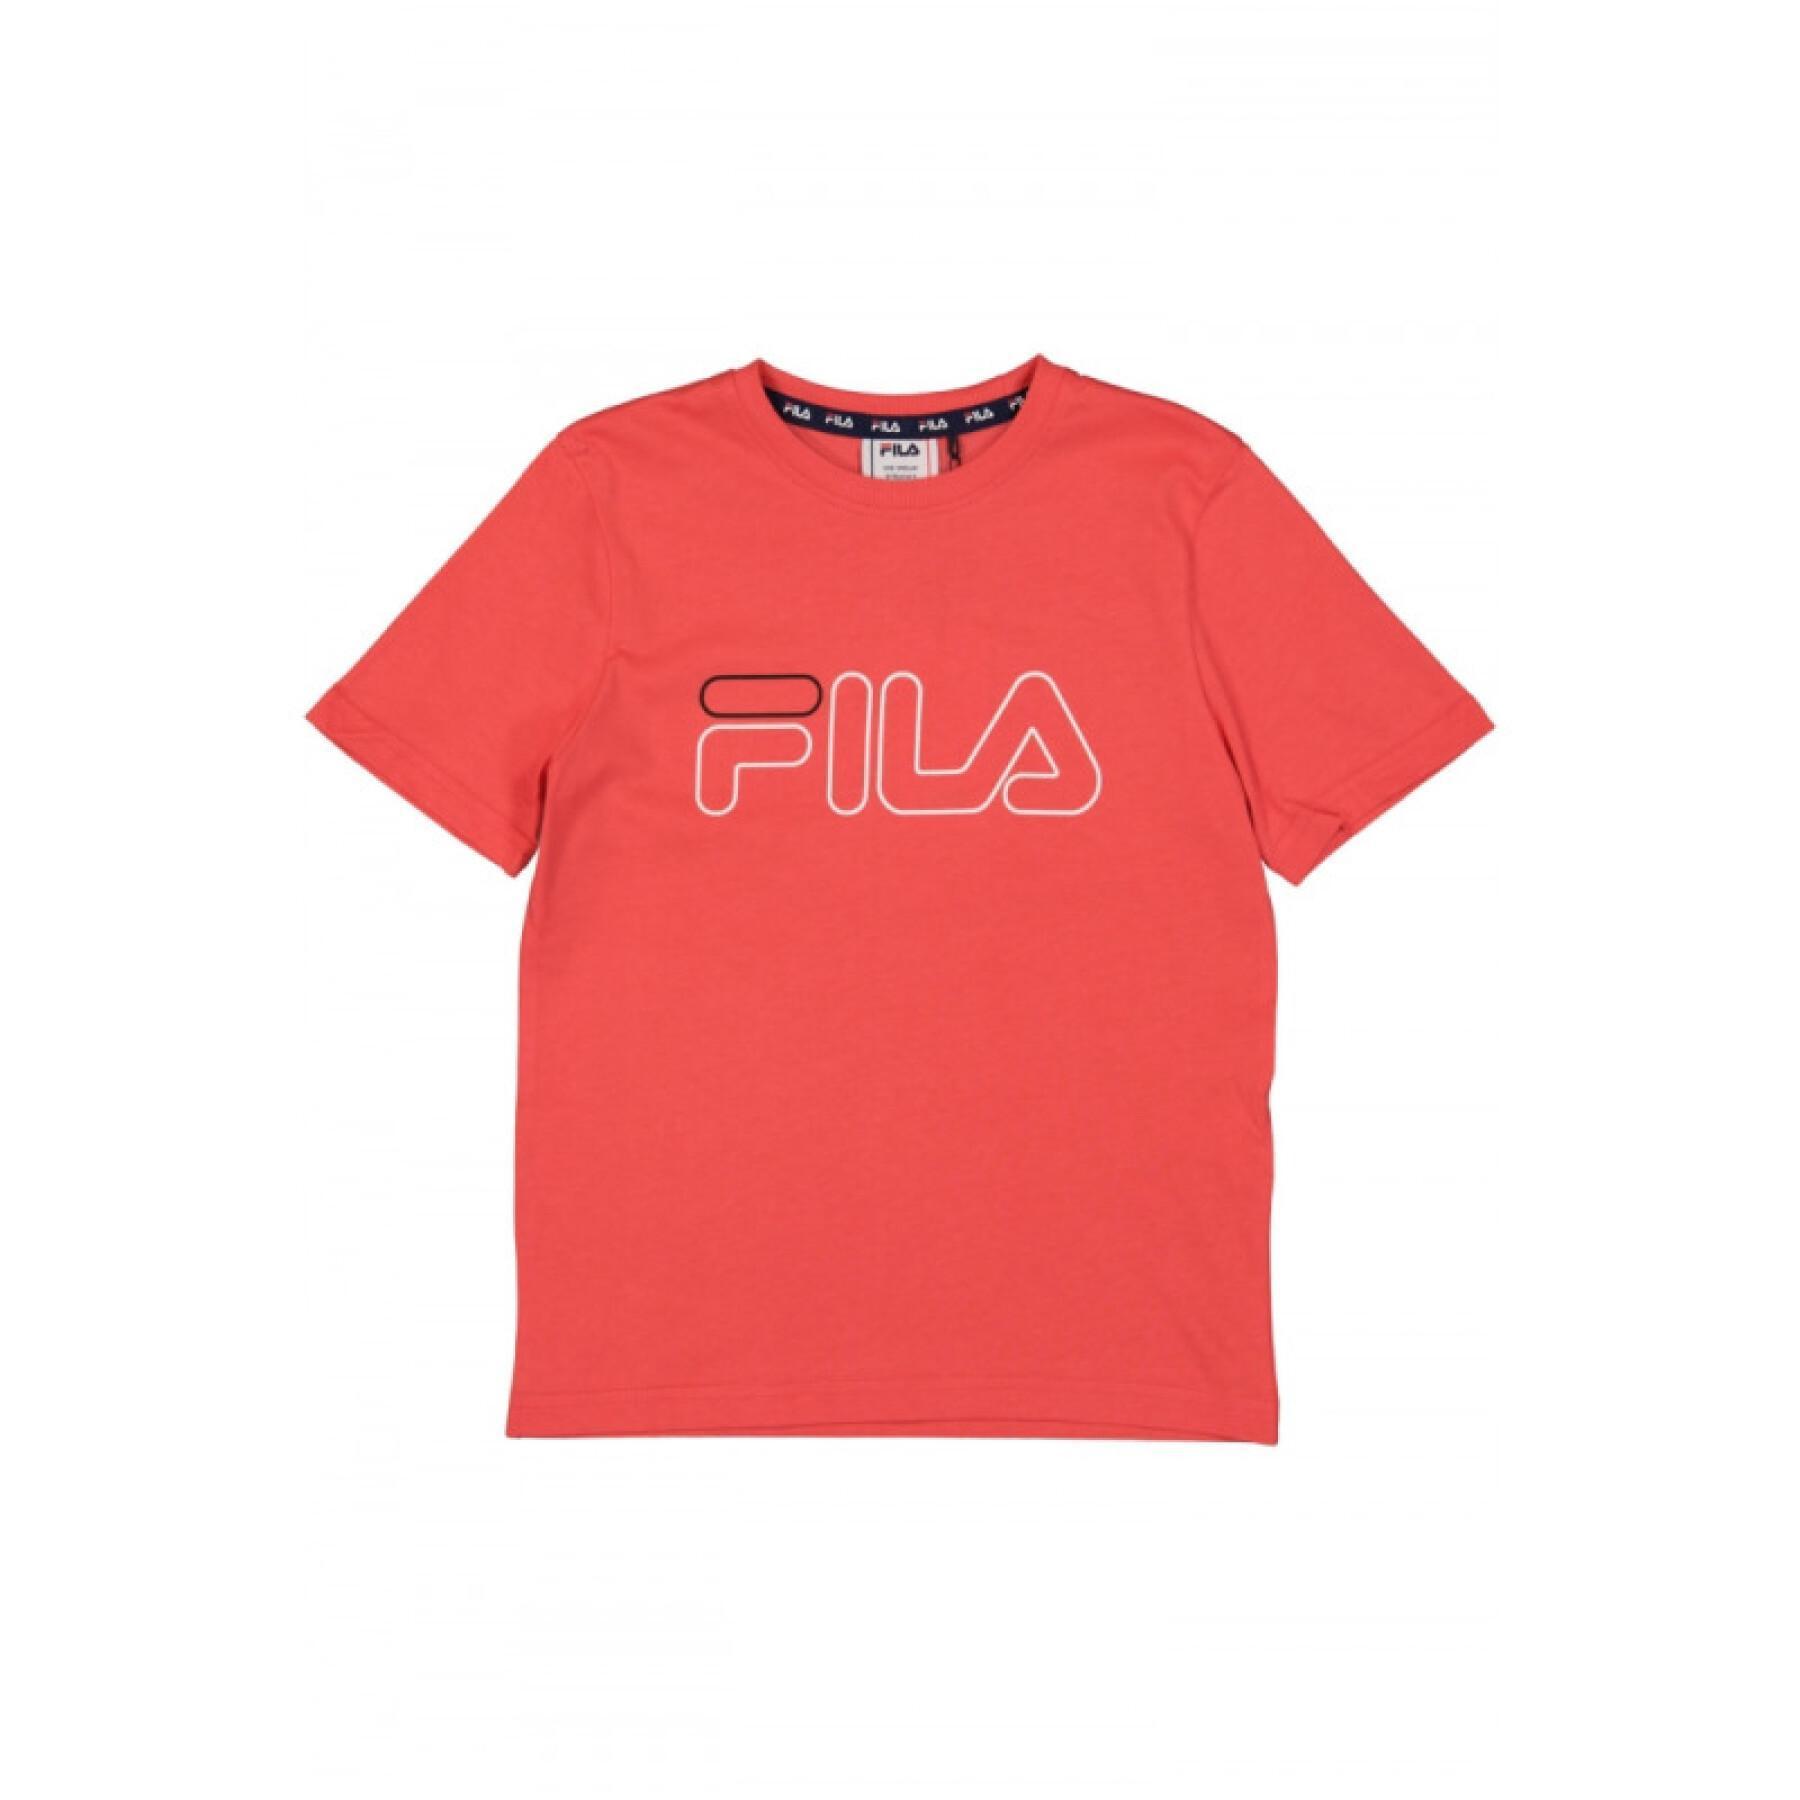 Meisjes-T-shirt Fila Salmaise